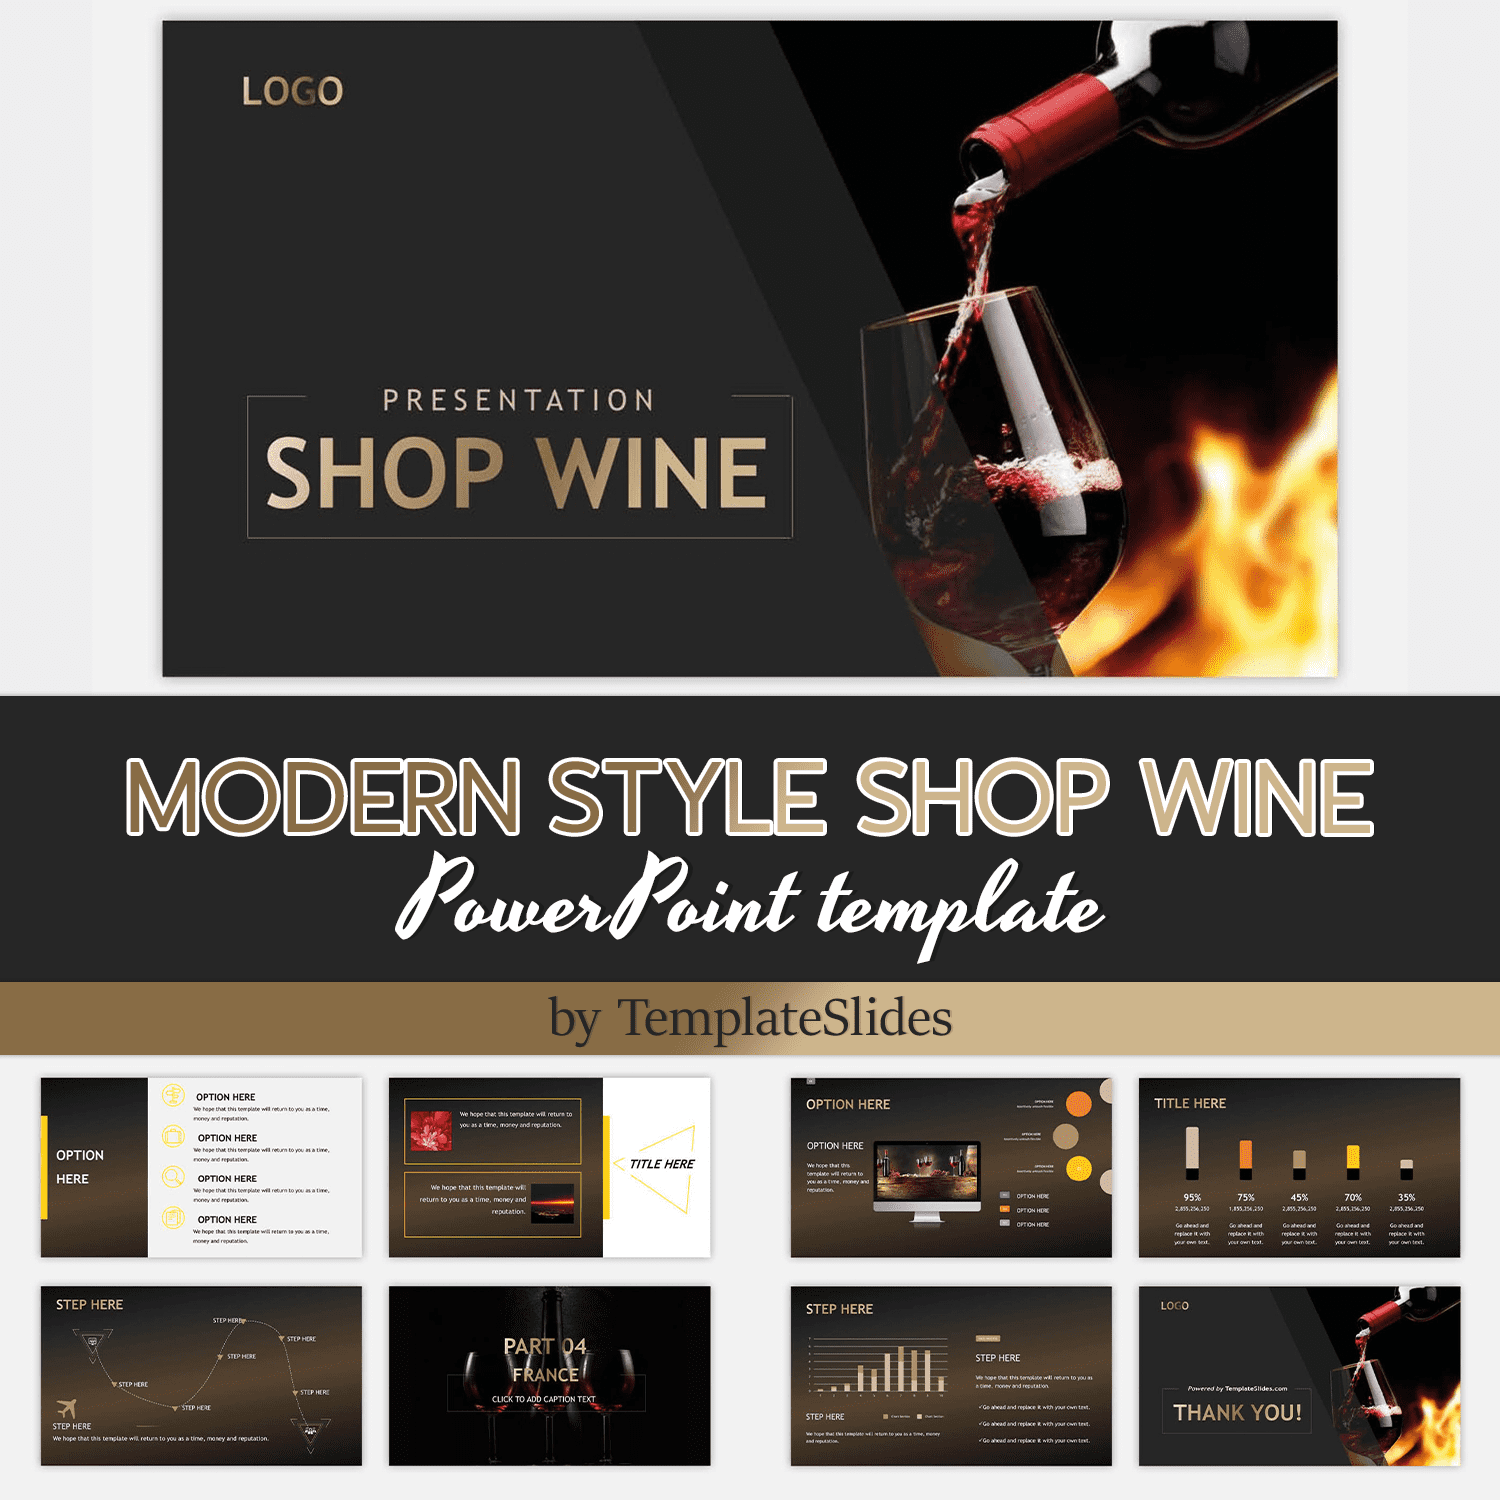 Modern Style Shop Wine PowerPoint Template.